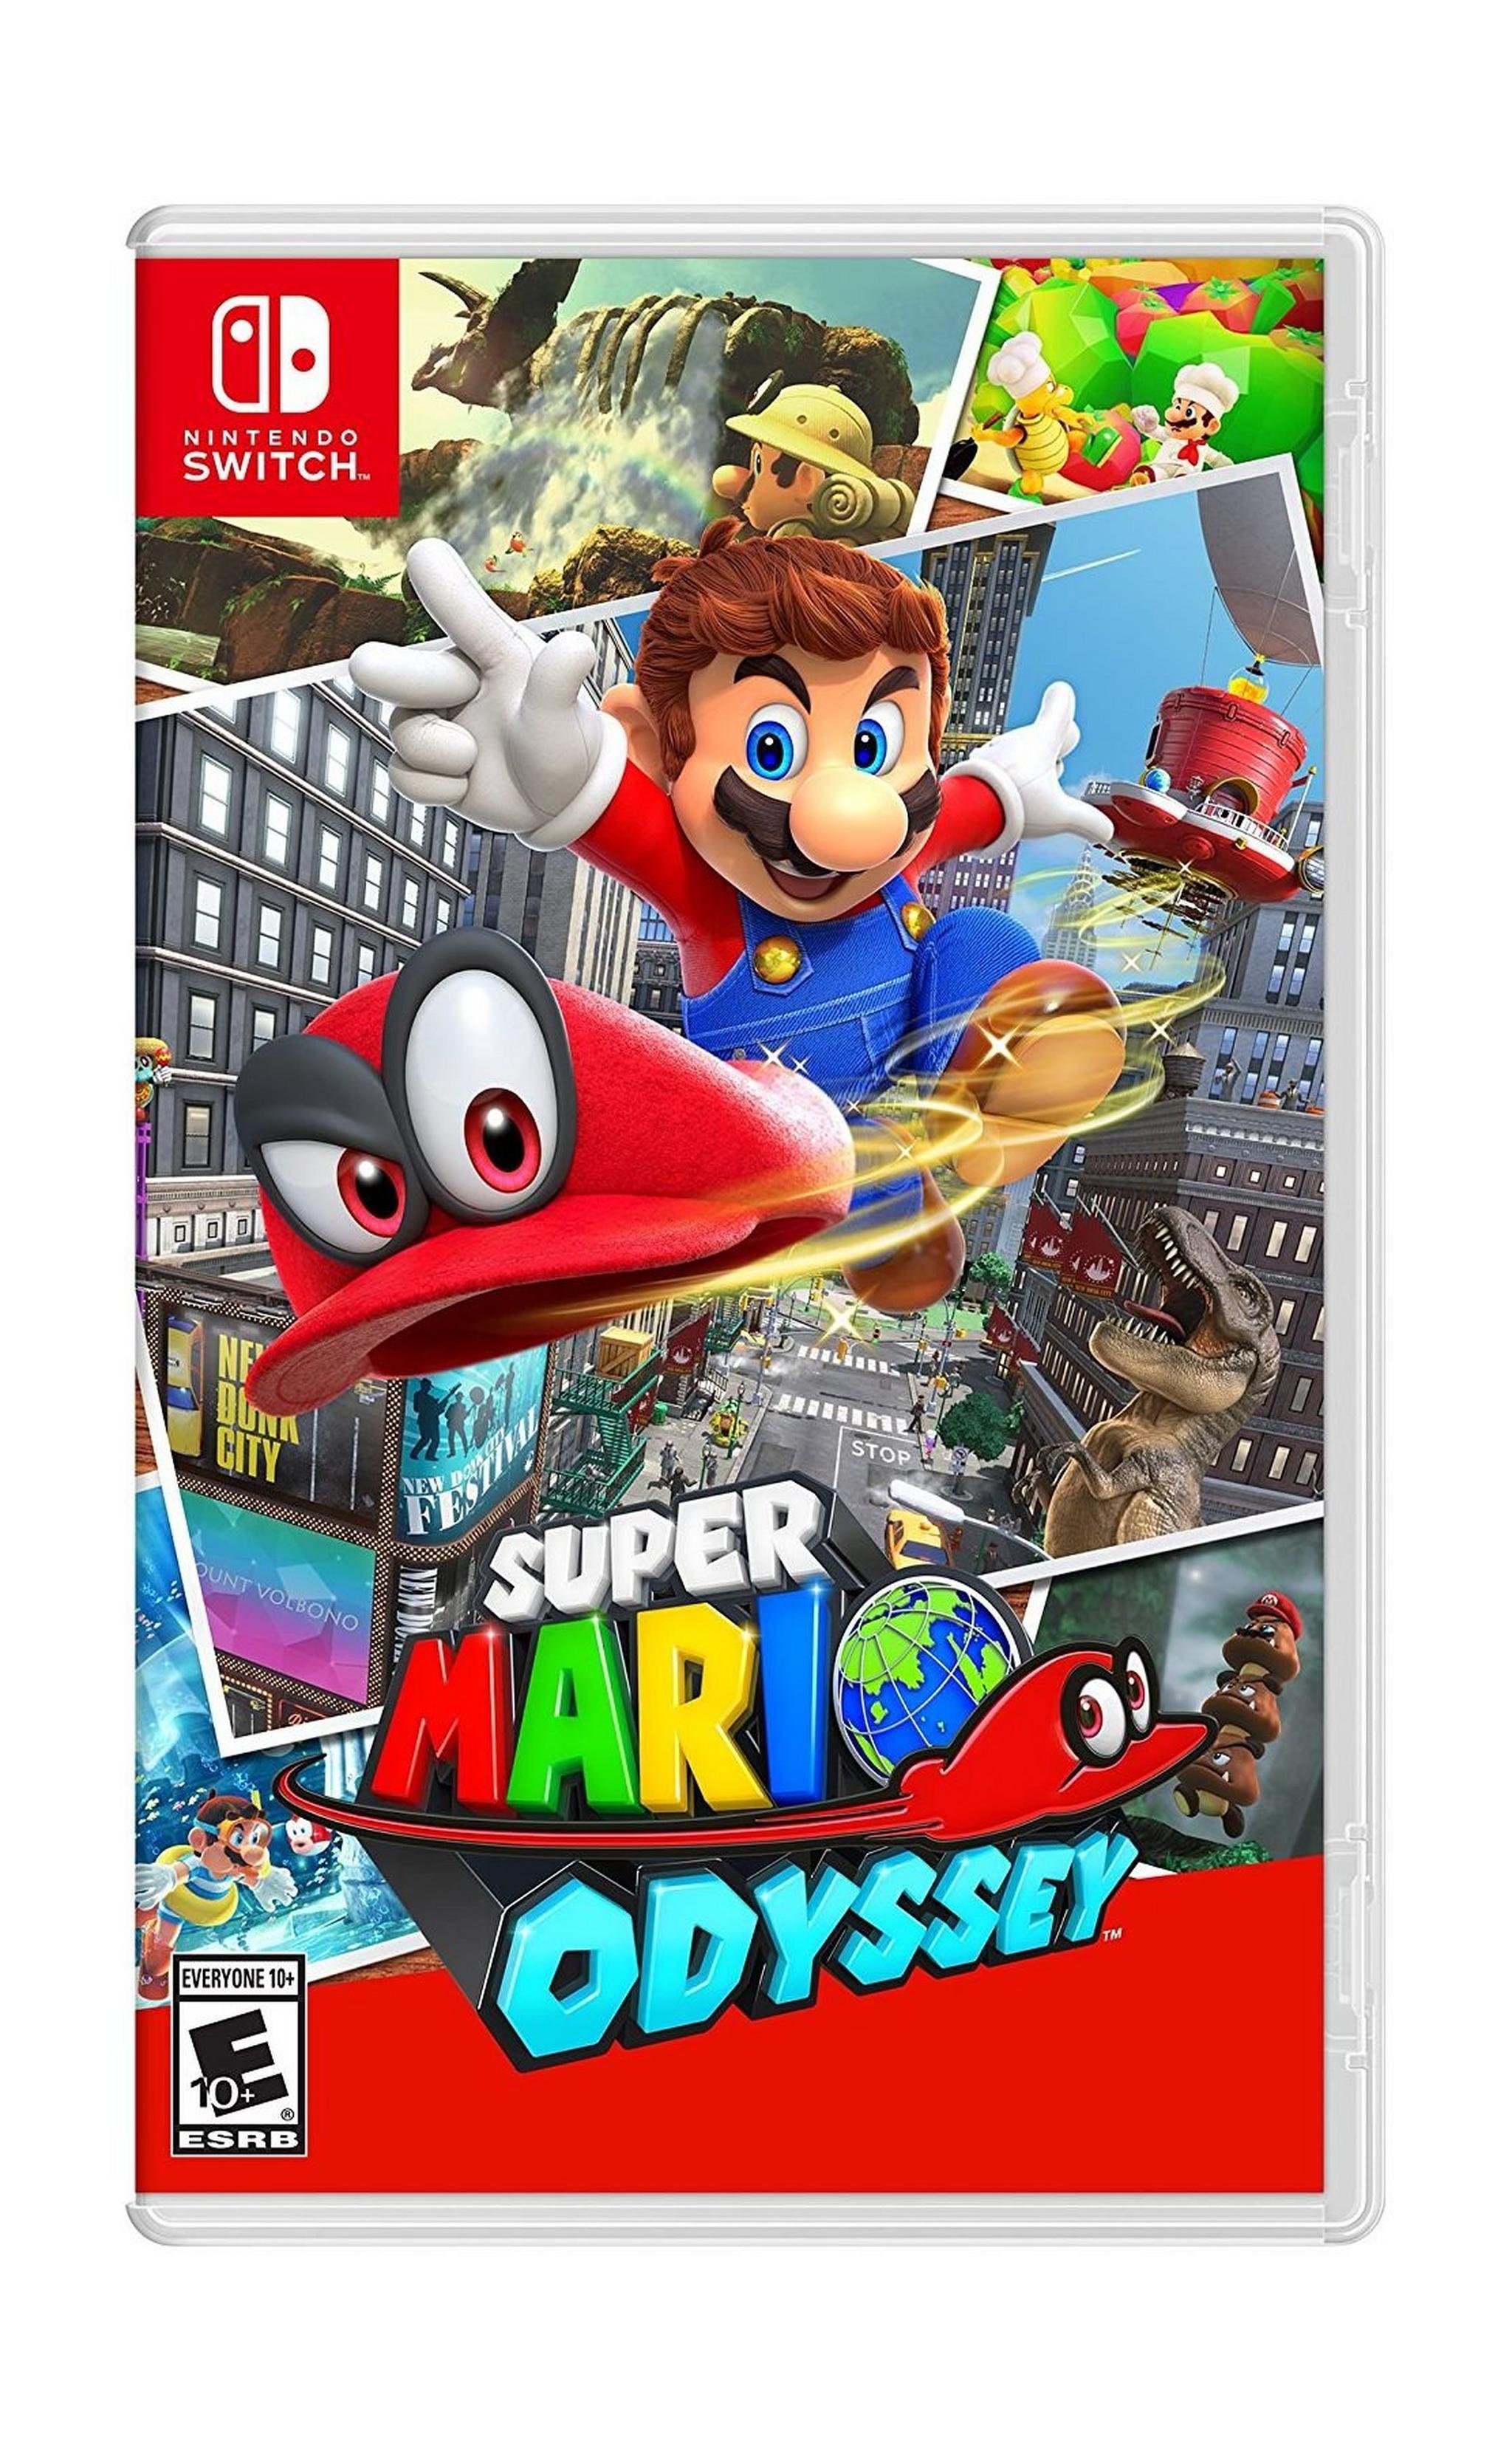 Nintendo Switch Console + Super Mario Odyssey